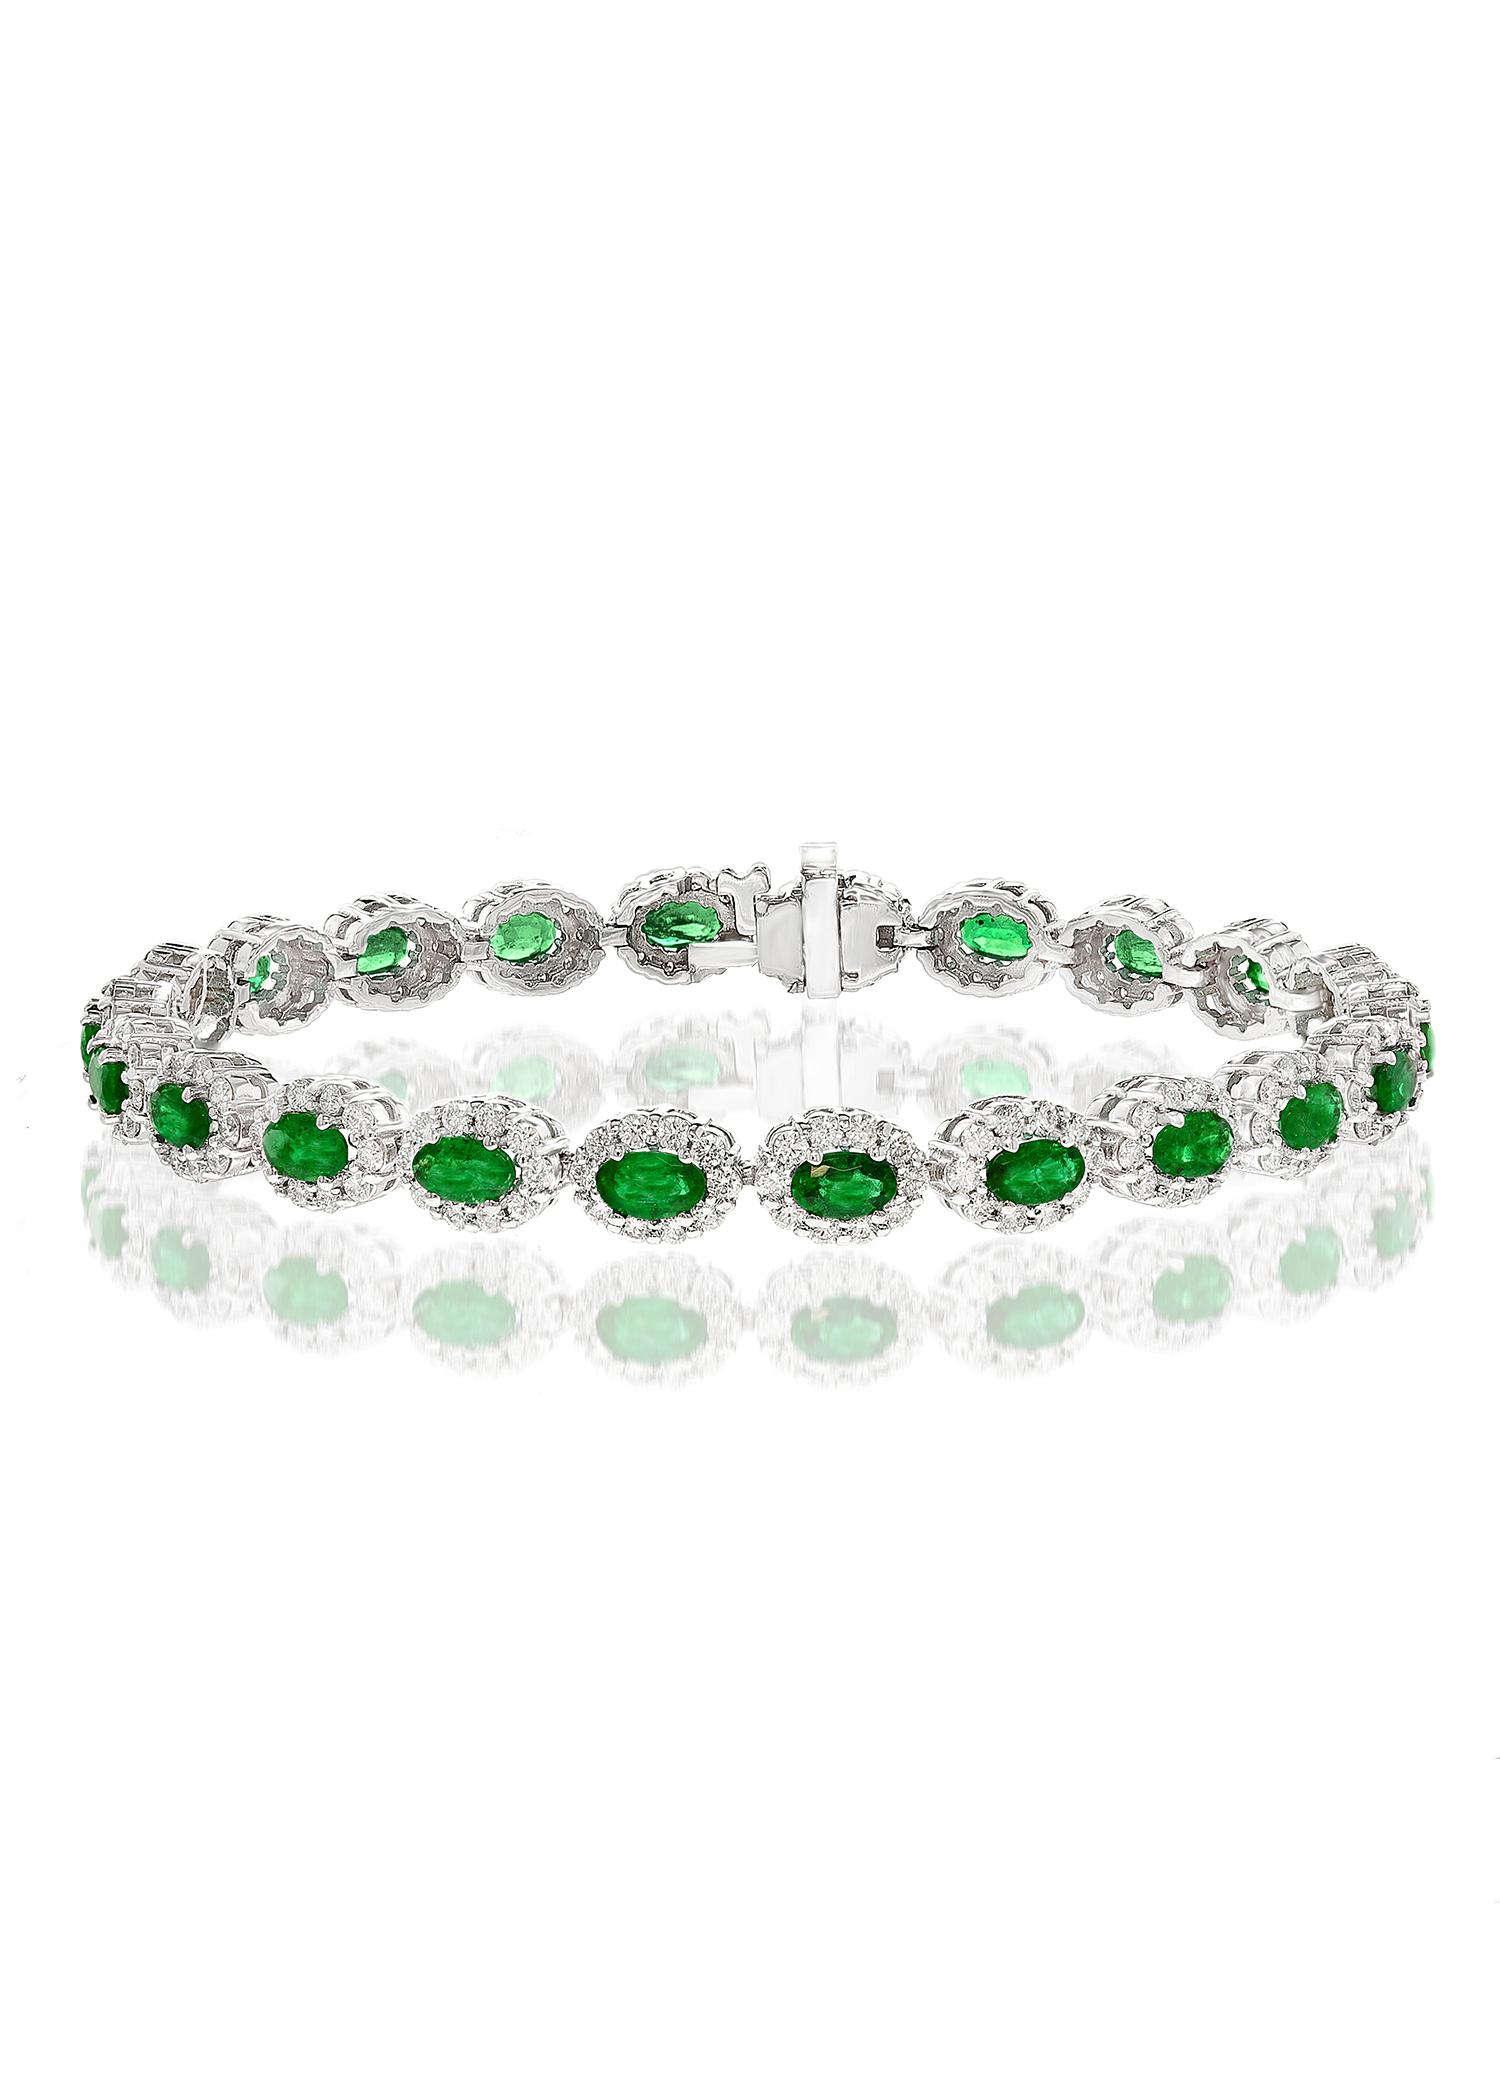 Oval Shaped Emerald Bracelet with Diamonds